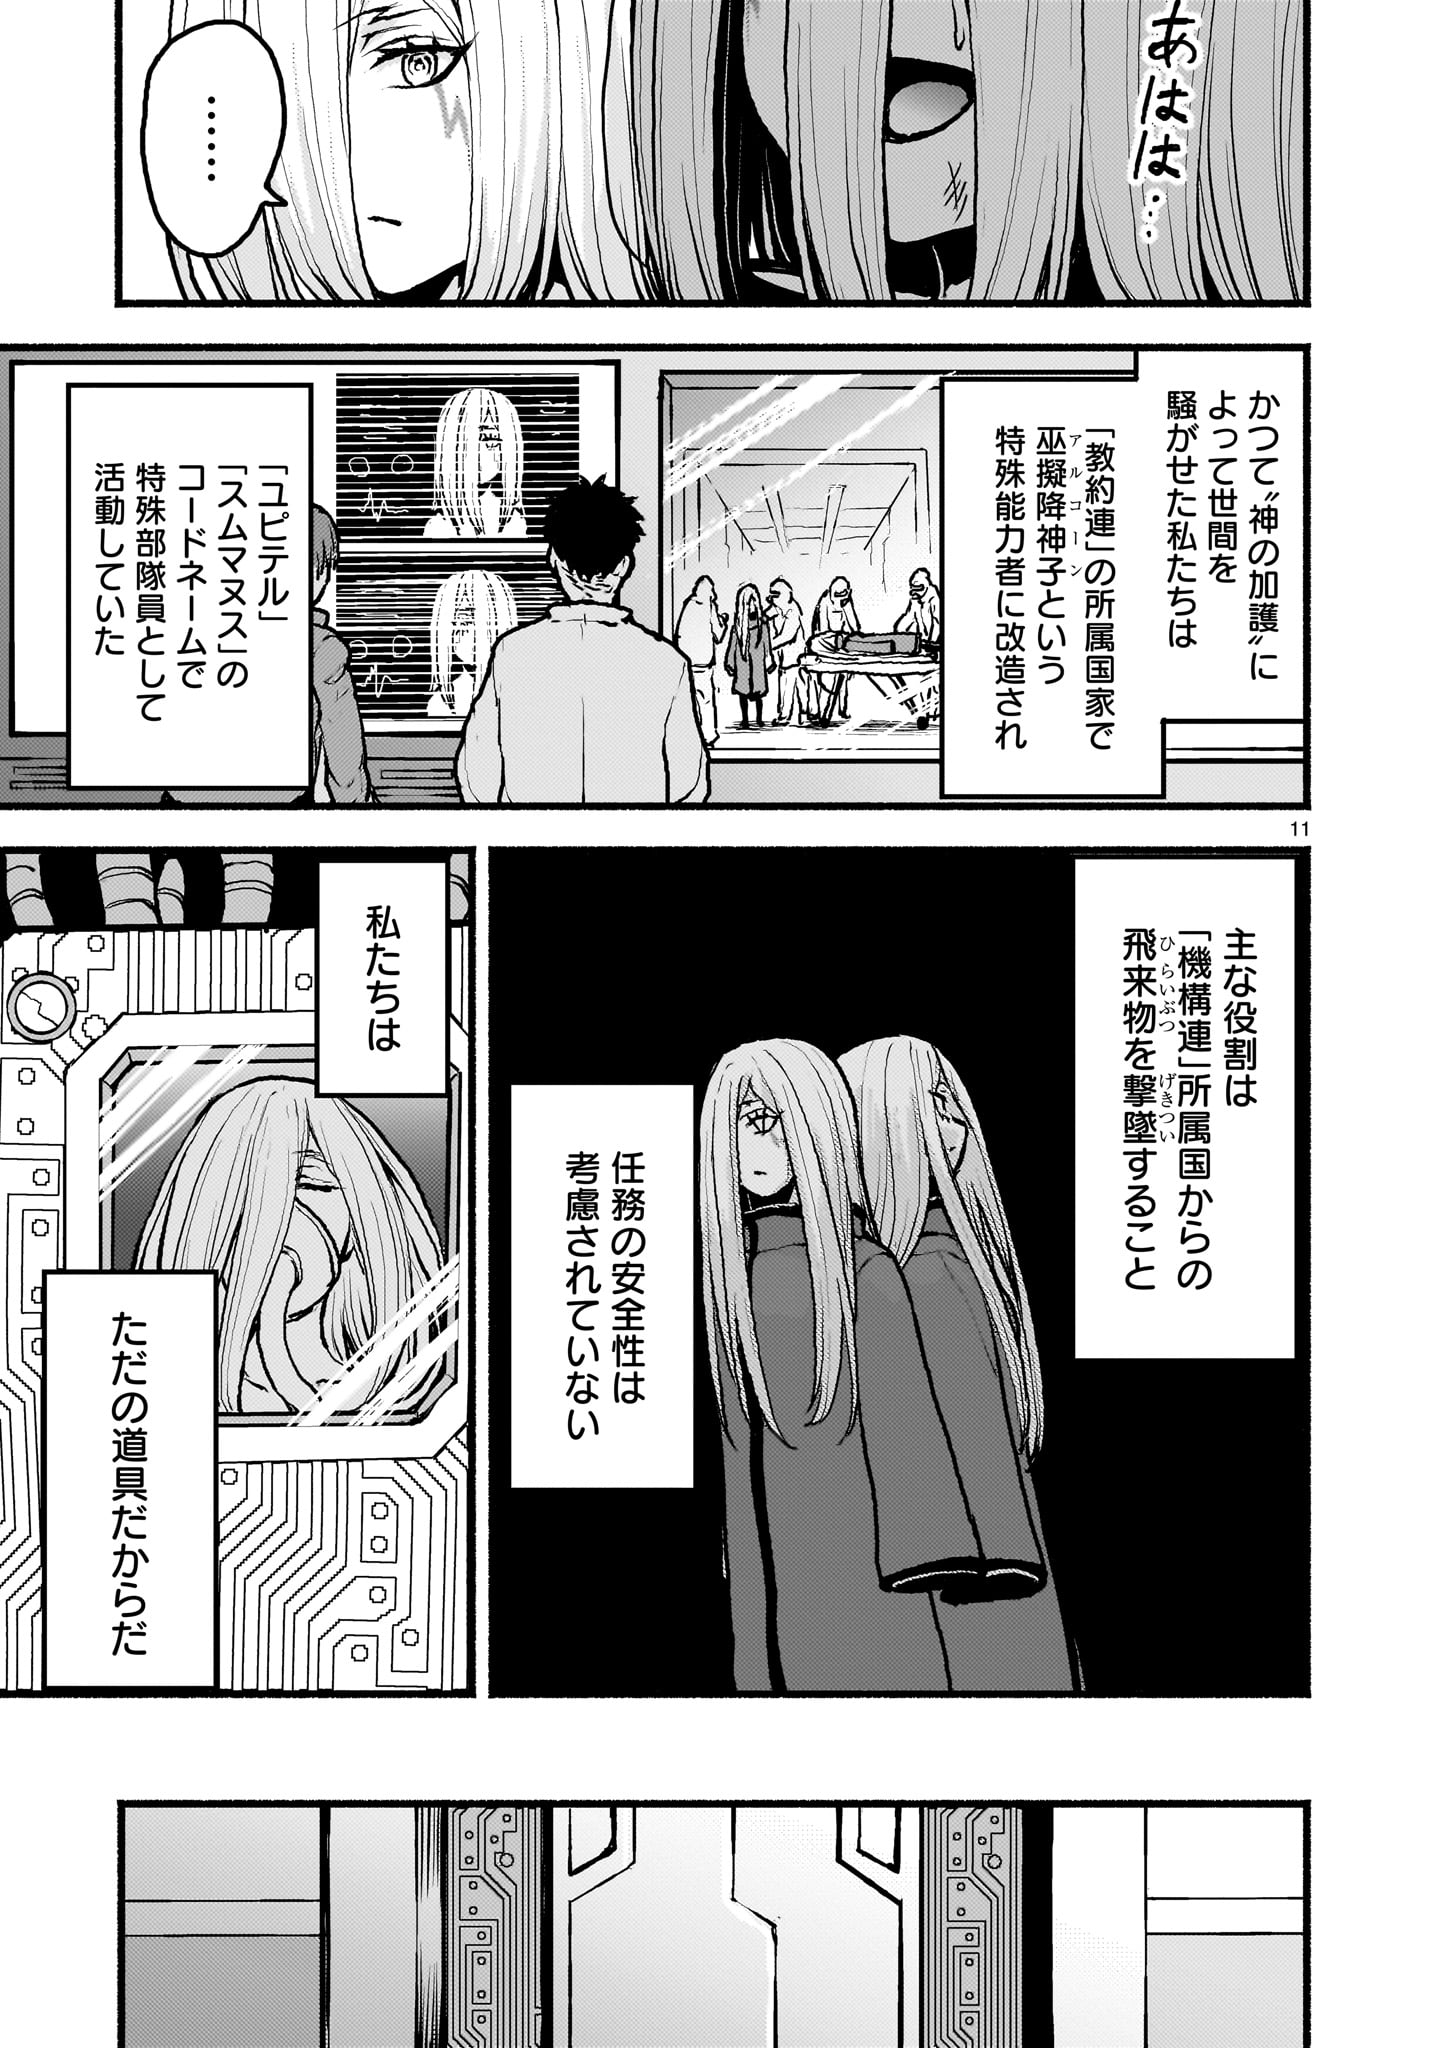 Kaminaki Sekai no Kamisama Katsudou - Chapter 51 - Page 11